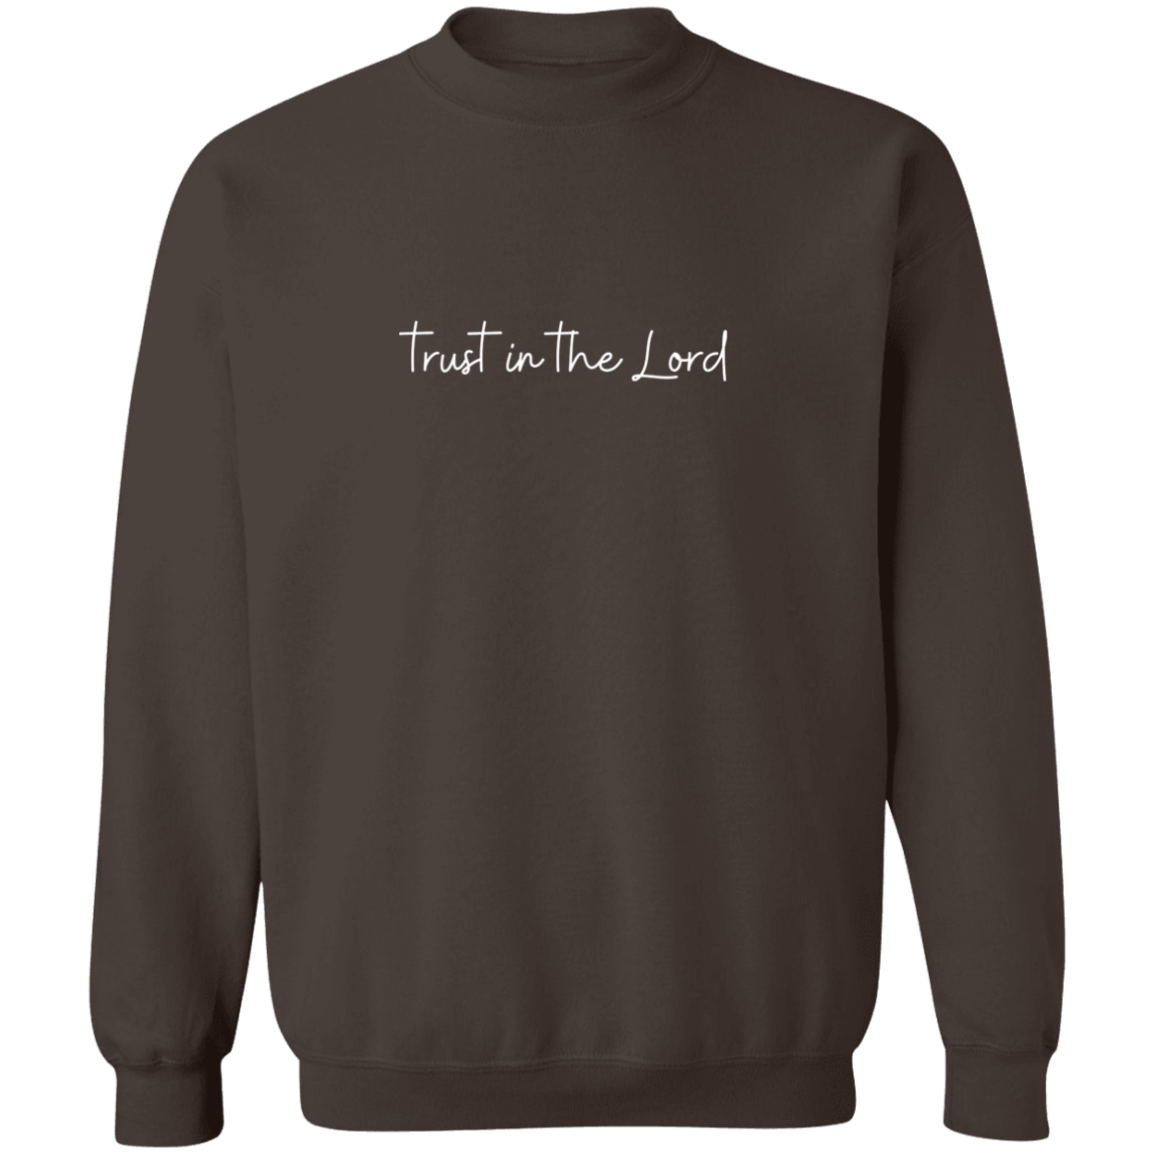 Trust in the Lord Sweatshirt Christian Sweatshirts Christian Gift Faith Sweatshirt Jesus Sweater